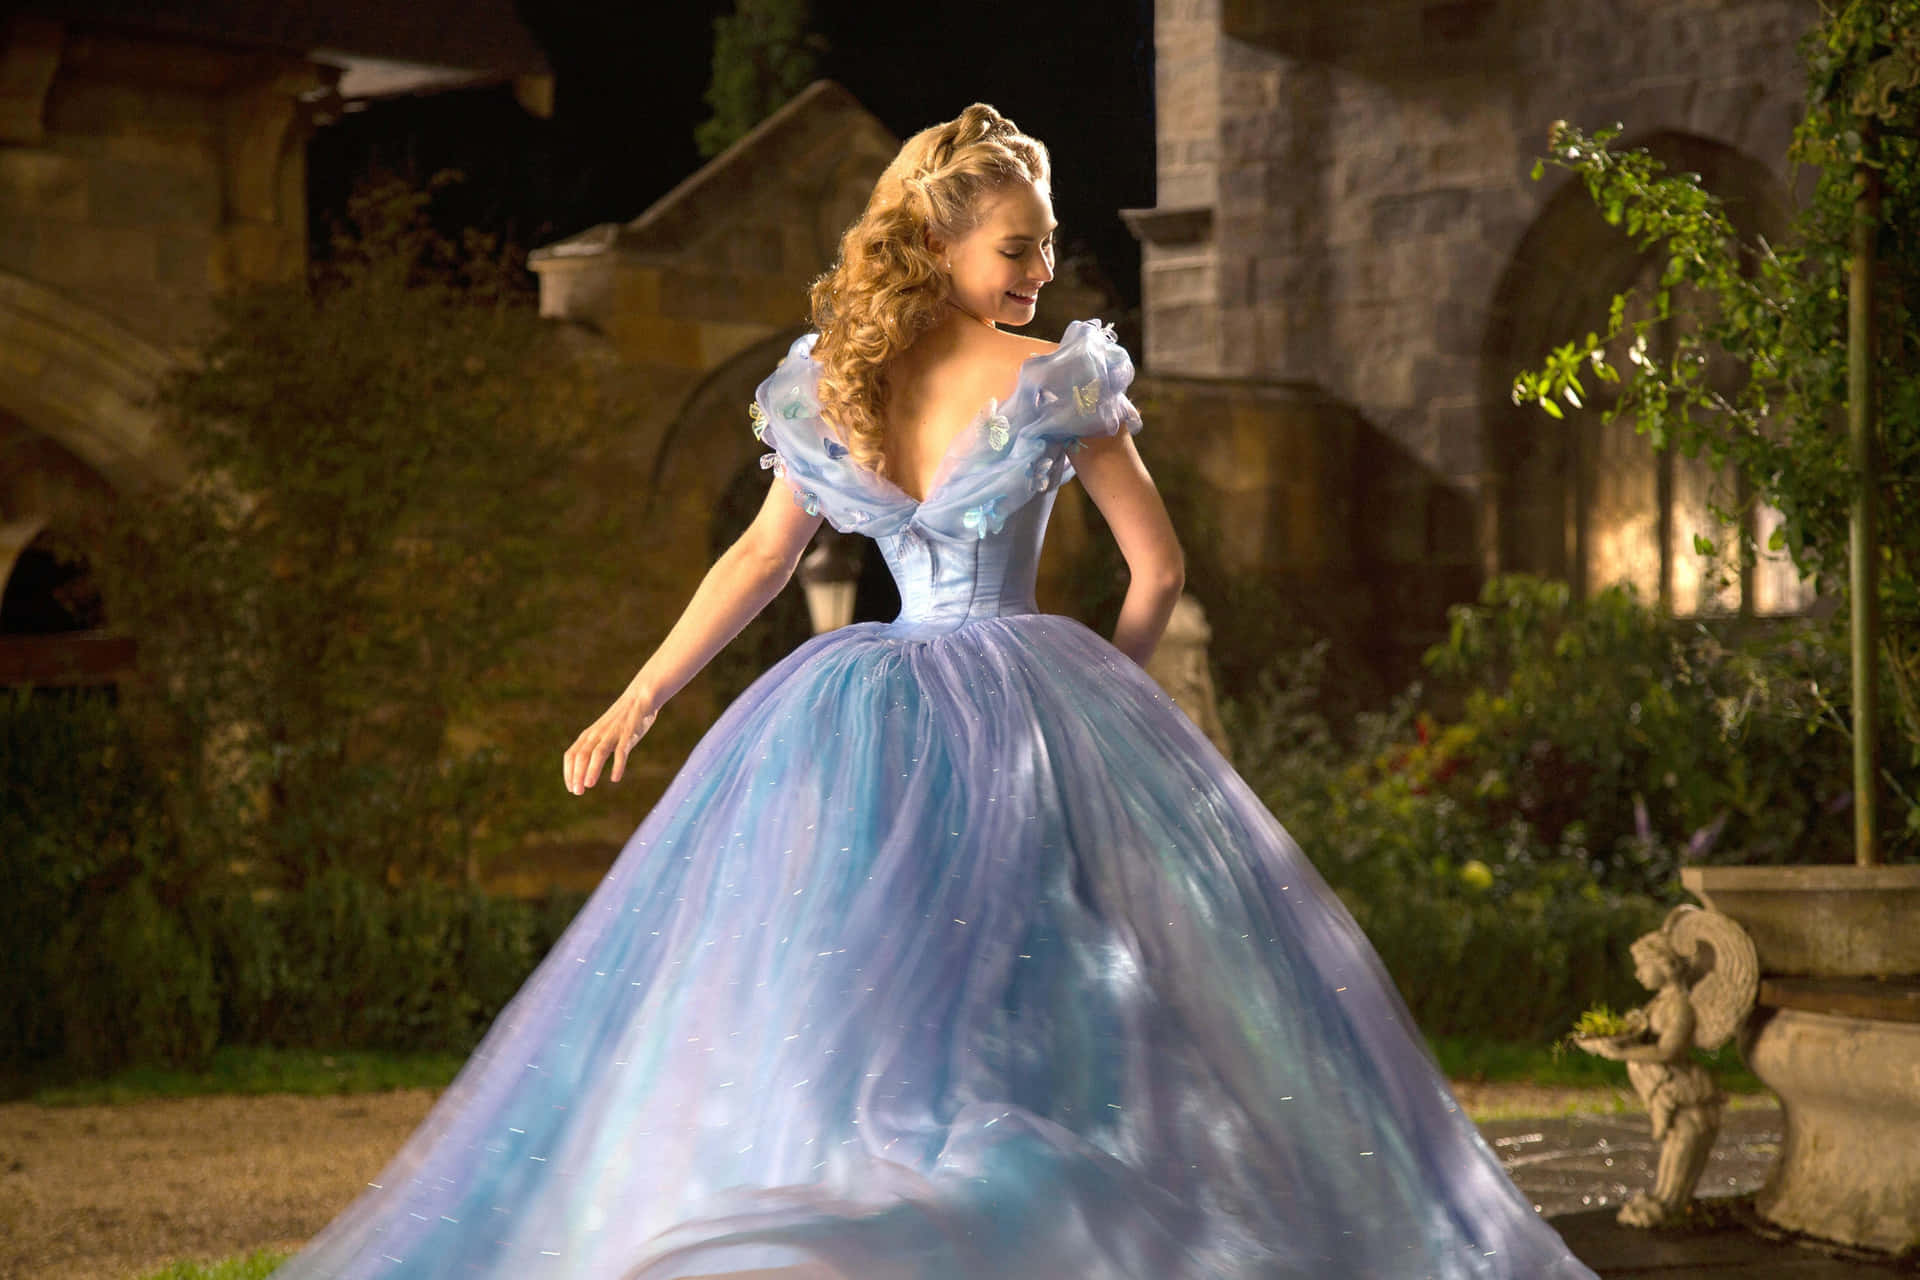 Cinderella In A Blue Dress Walking In A Courtyard